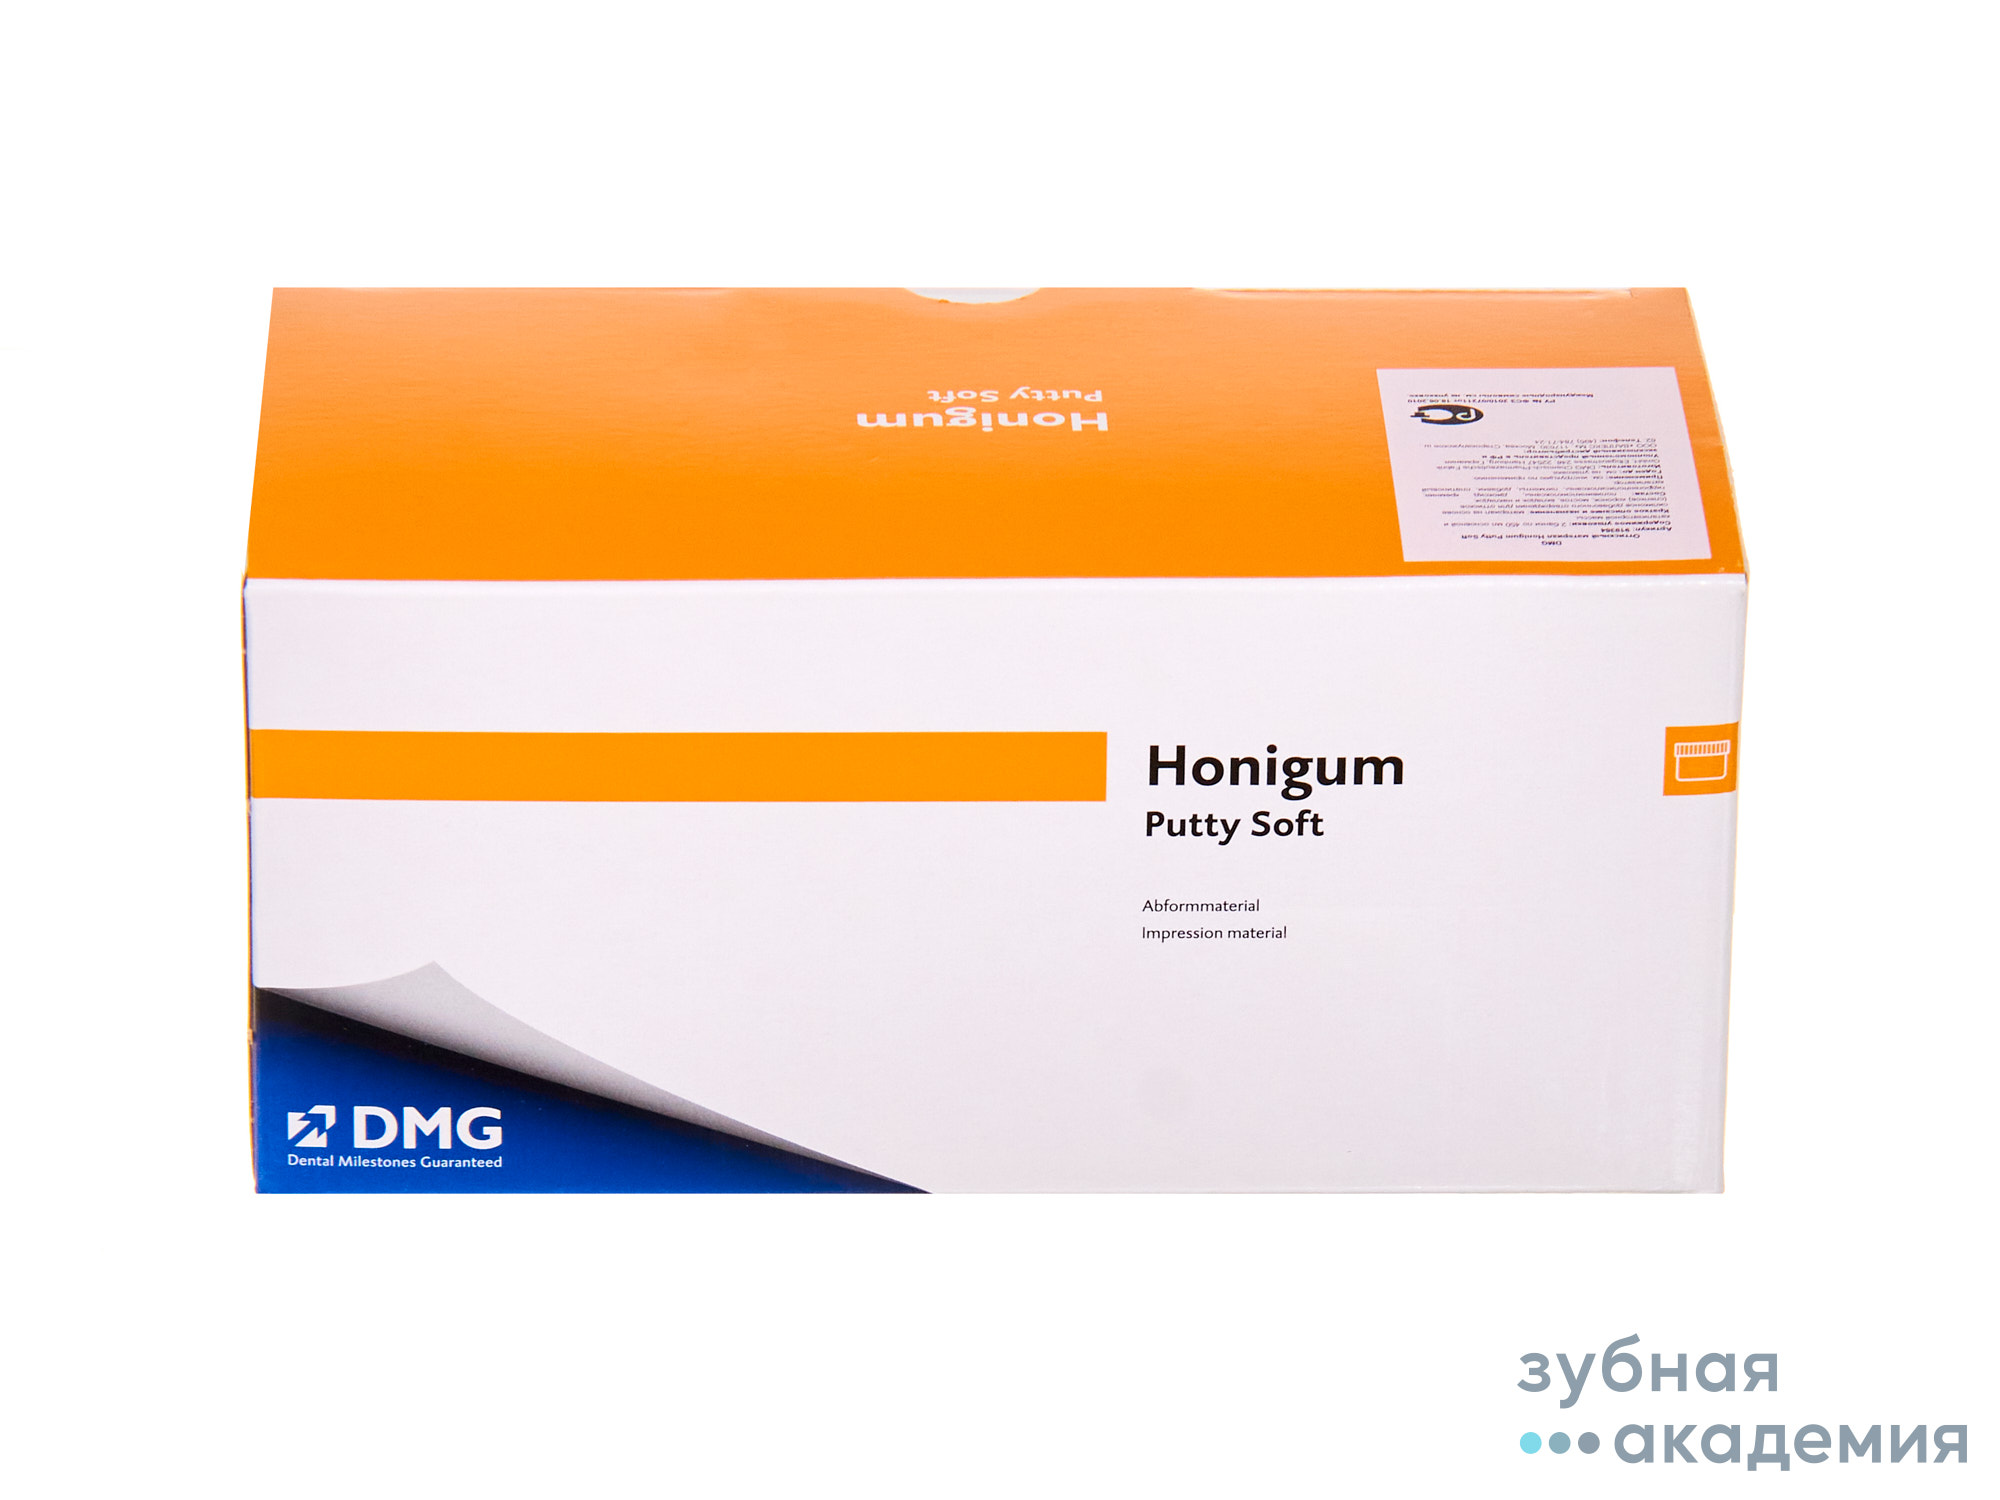 Honigum Putty Soft Хонигум Путти Софт упаковка 2*450 мл./DMG/Германия